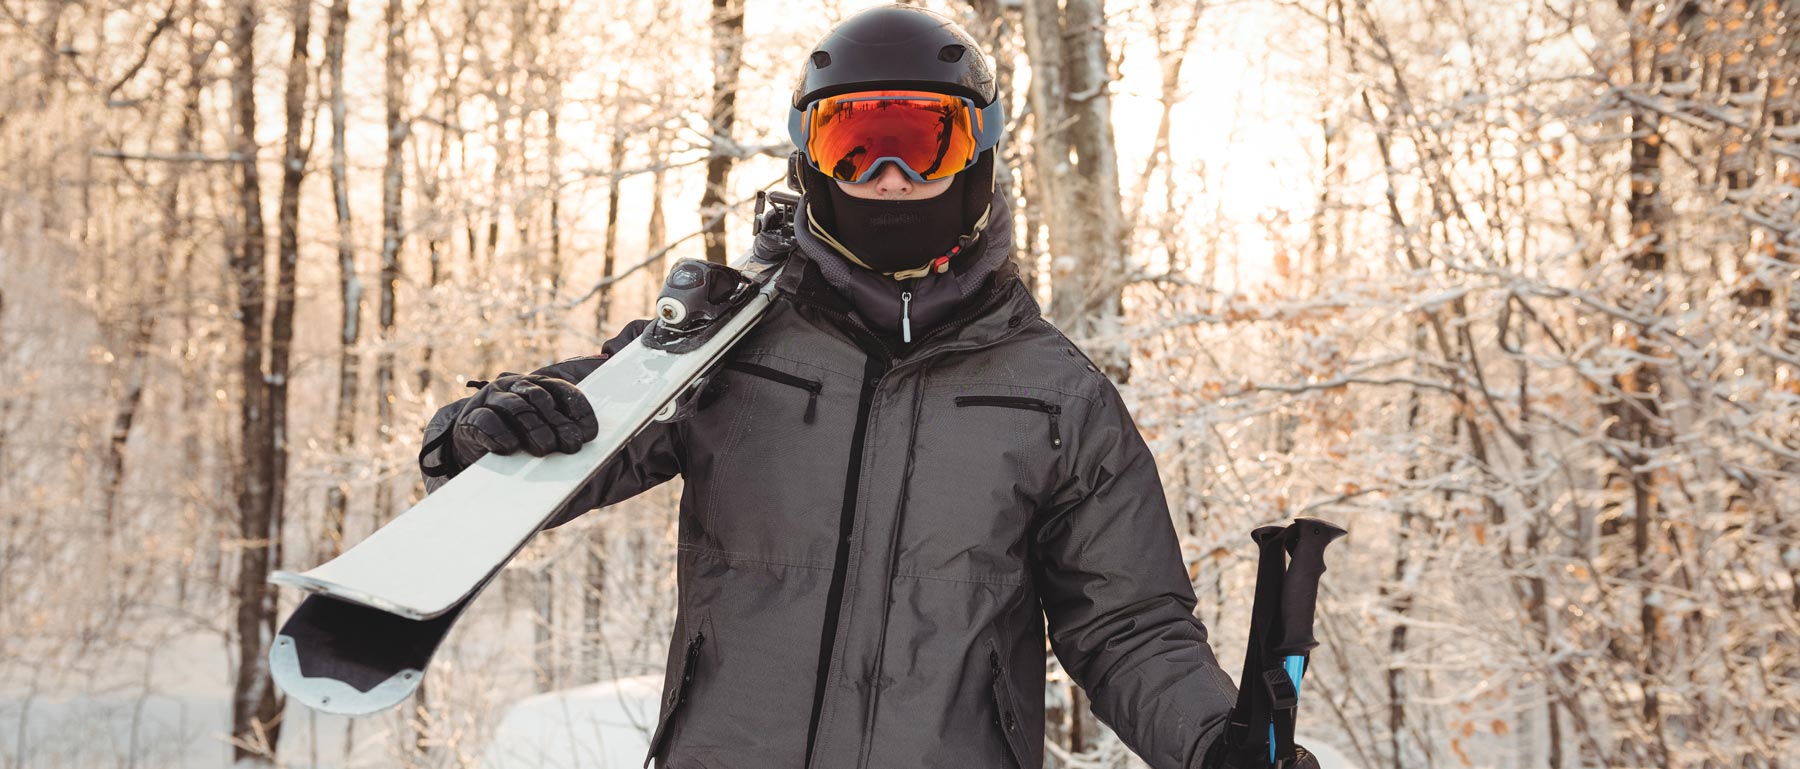 High Performance Ski and Snowboard Clothing Rental Whistler | Ski Pants,  Jackets, Boots, Helmet, Gloves | Ski / Snowboard Gear Rentals - Whistler  Winter Wear